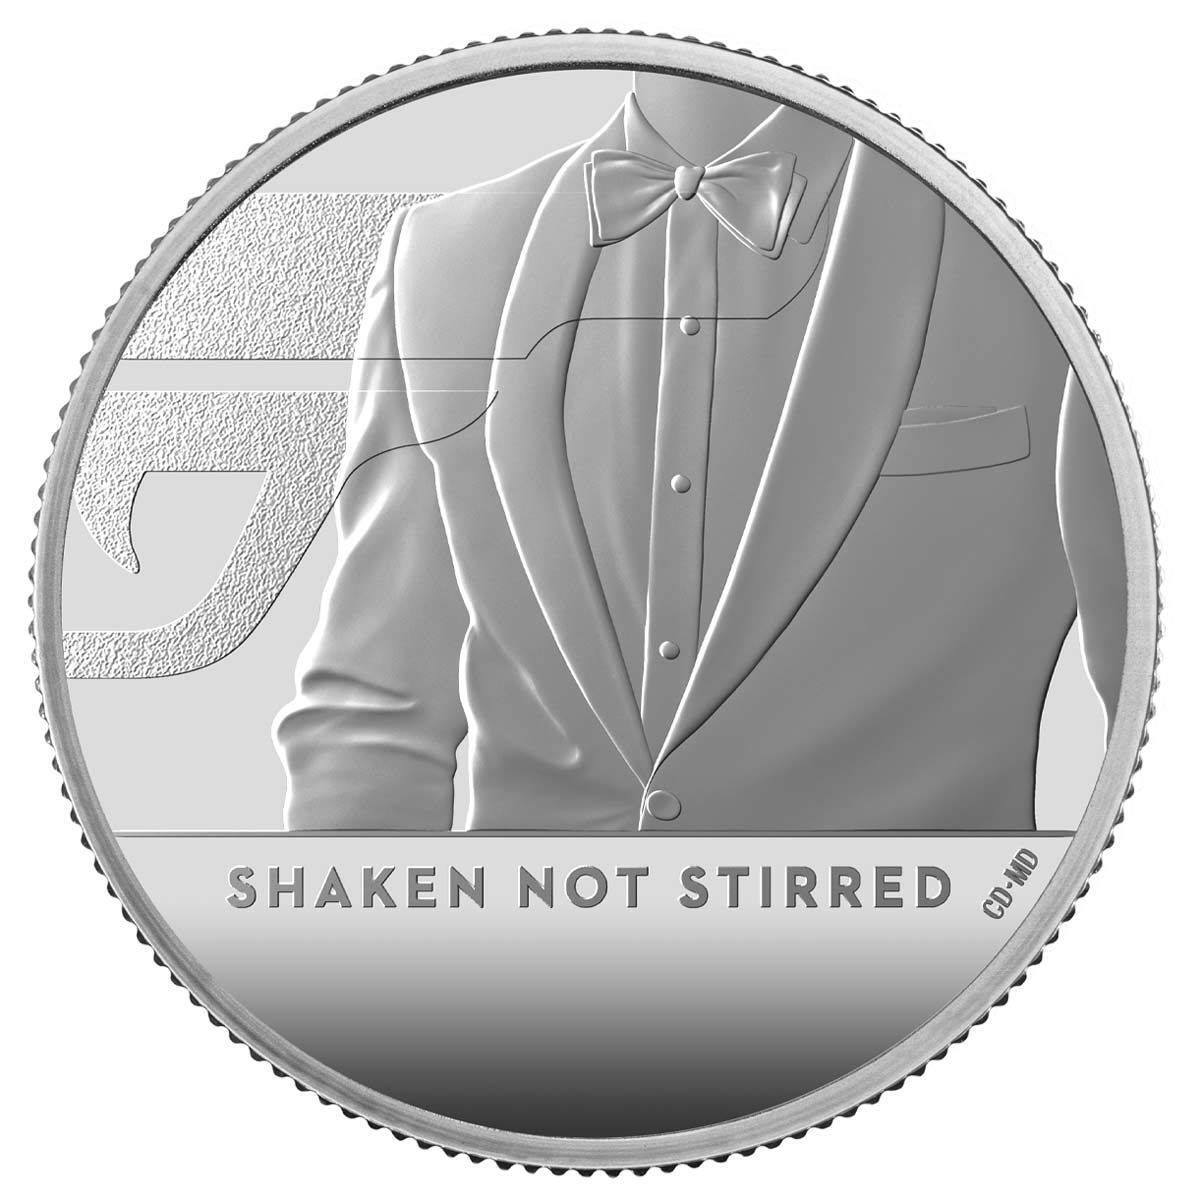 2020 £1 1/2oz Silver James Bond Shaken Not Stirred Proof Coin 